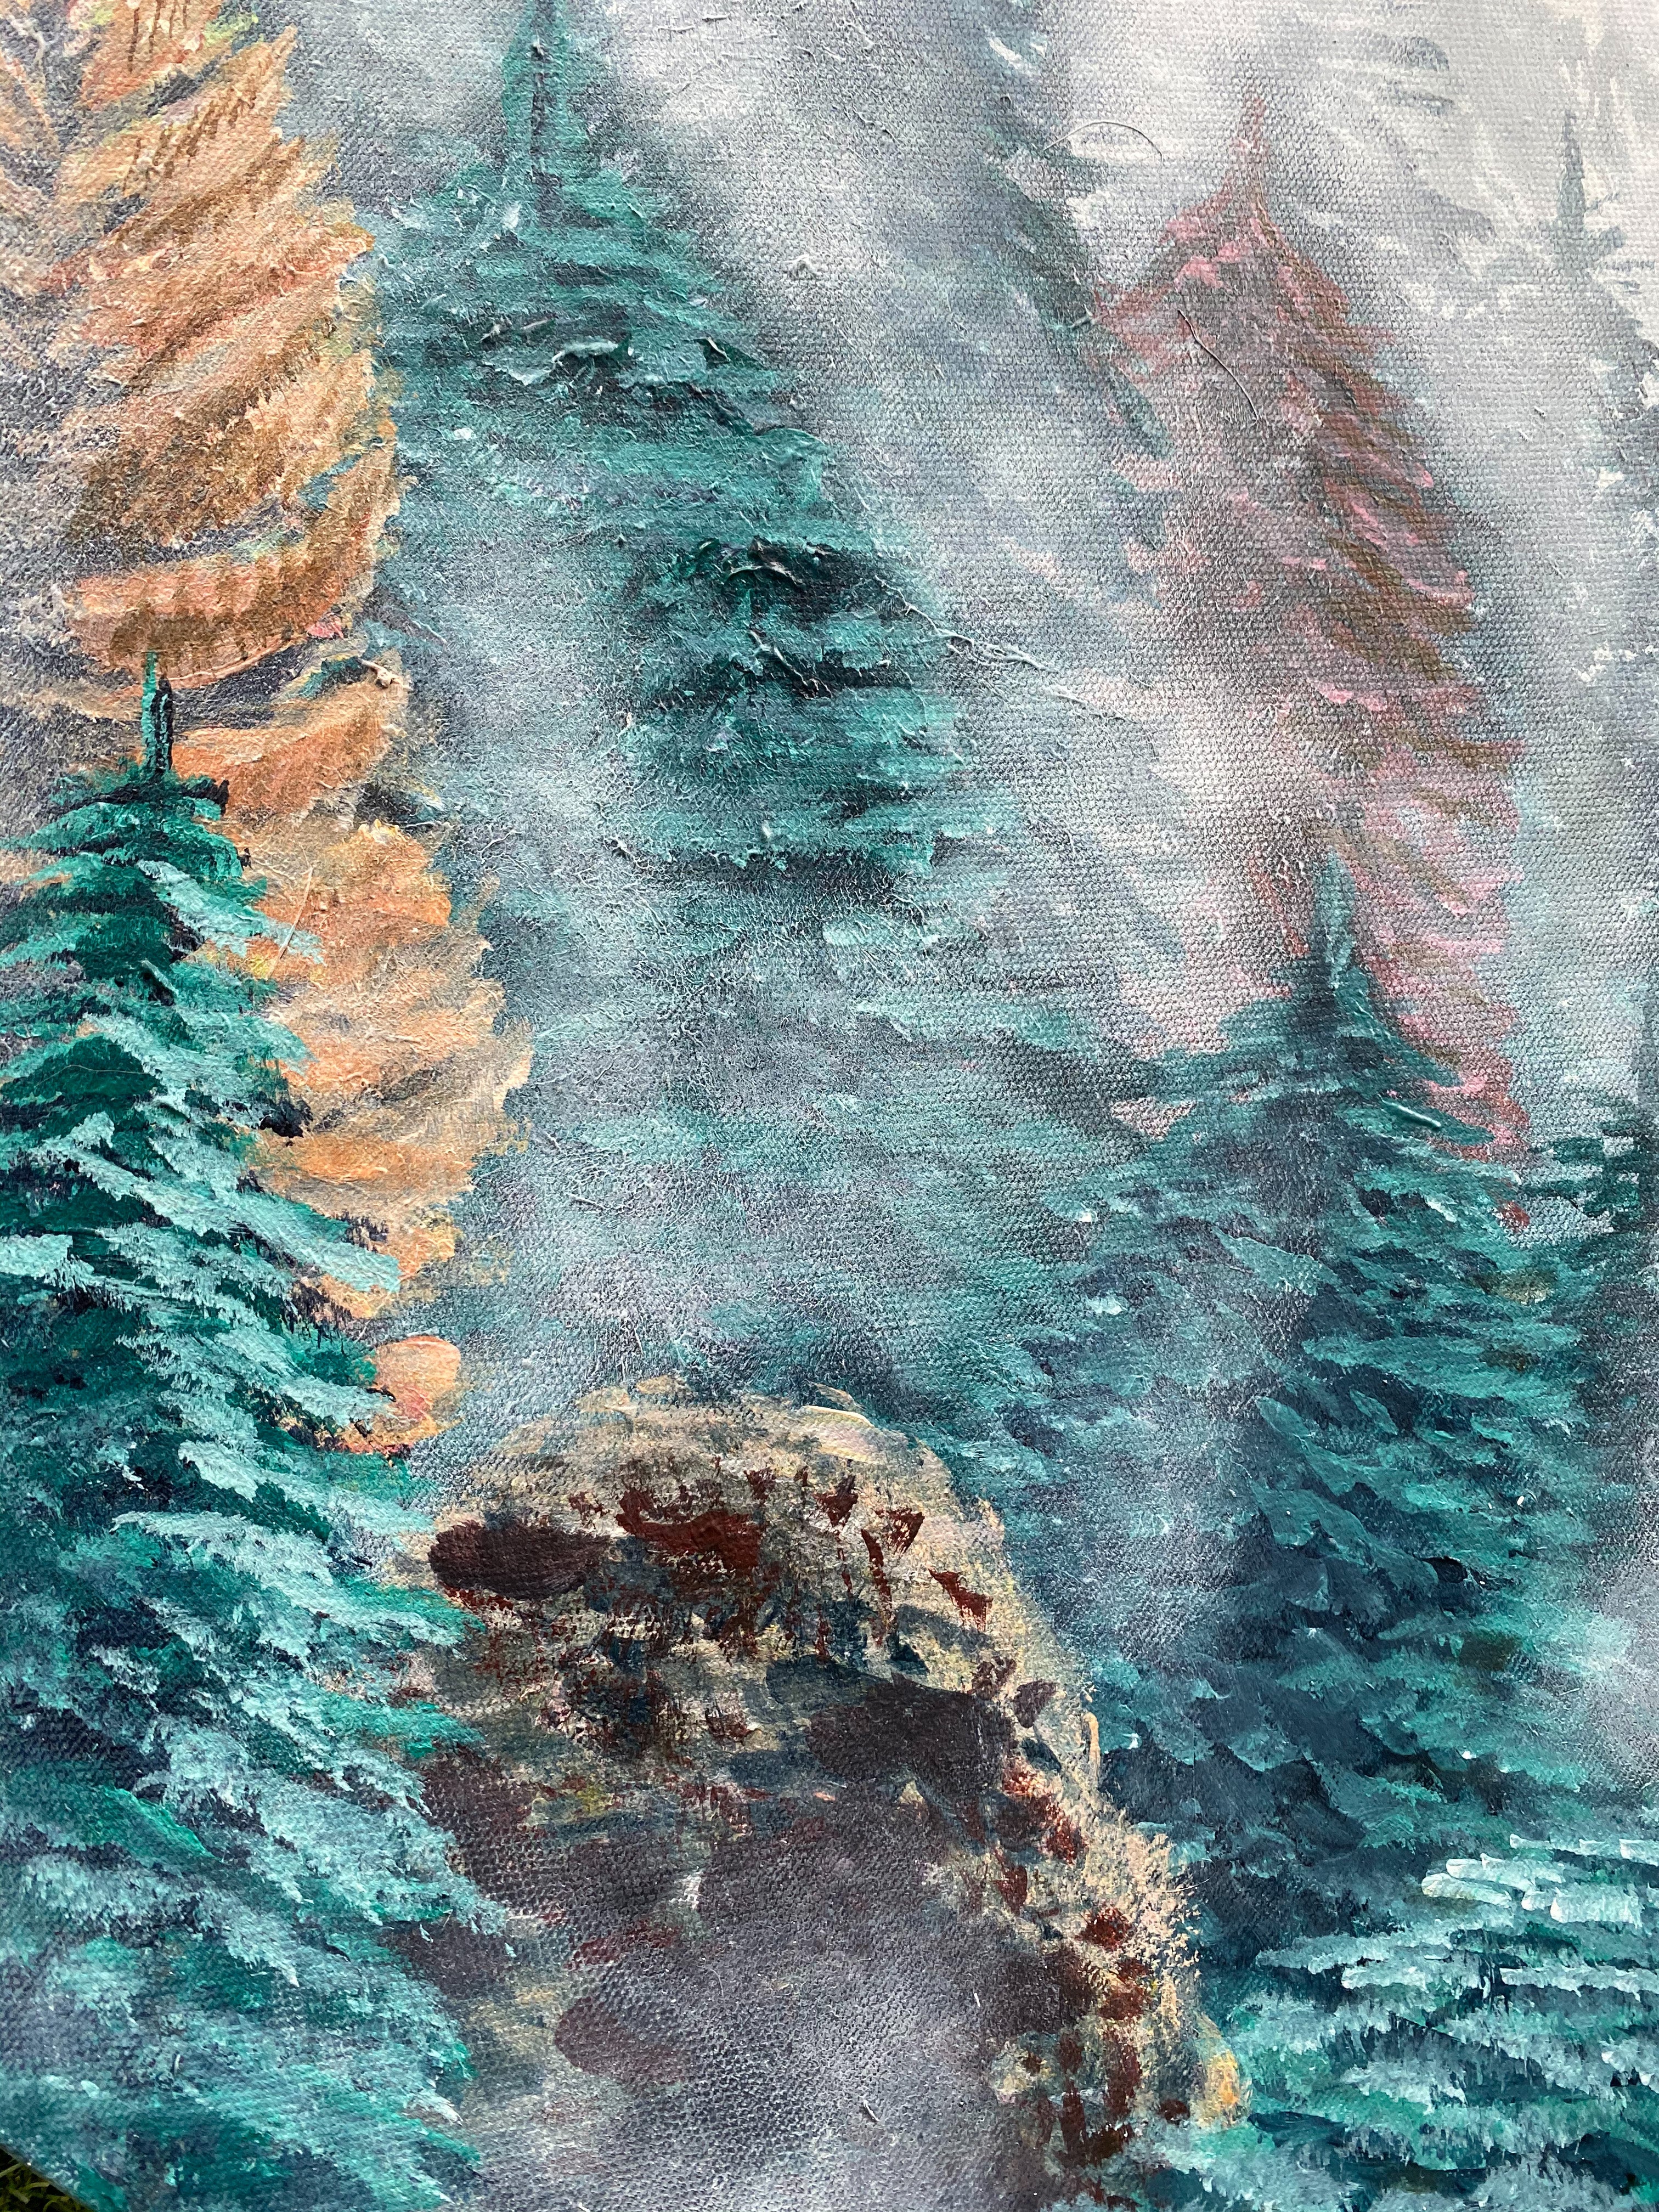 Mystery Forest: Landscape Round Canvas Art – Julia Art Arc